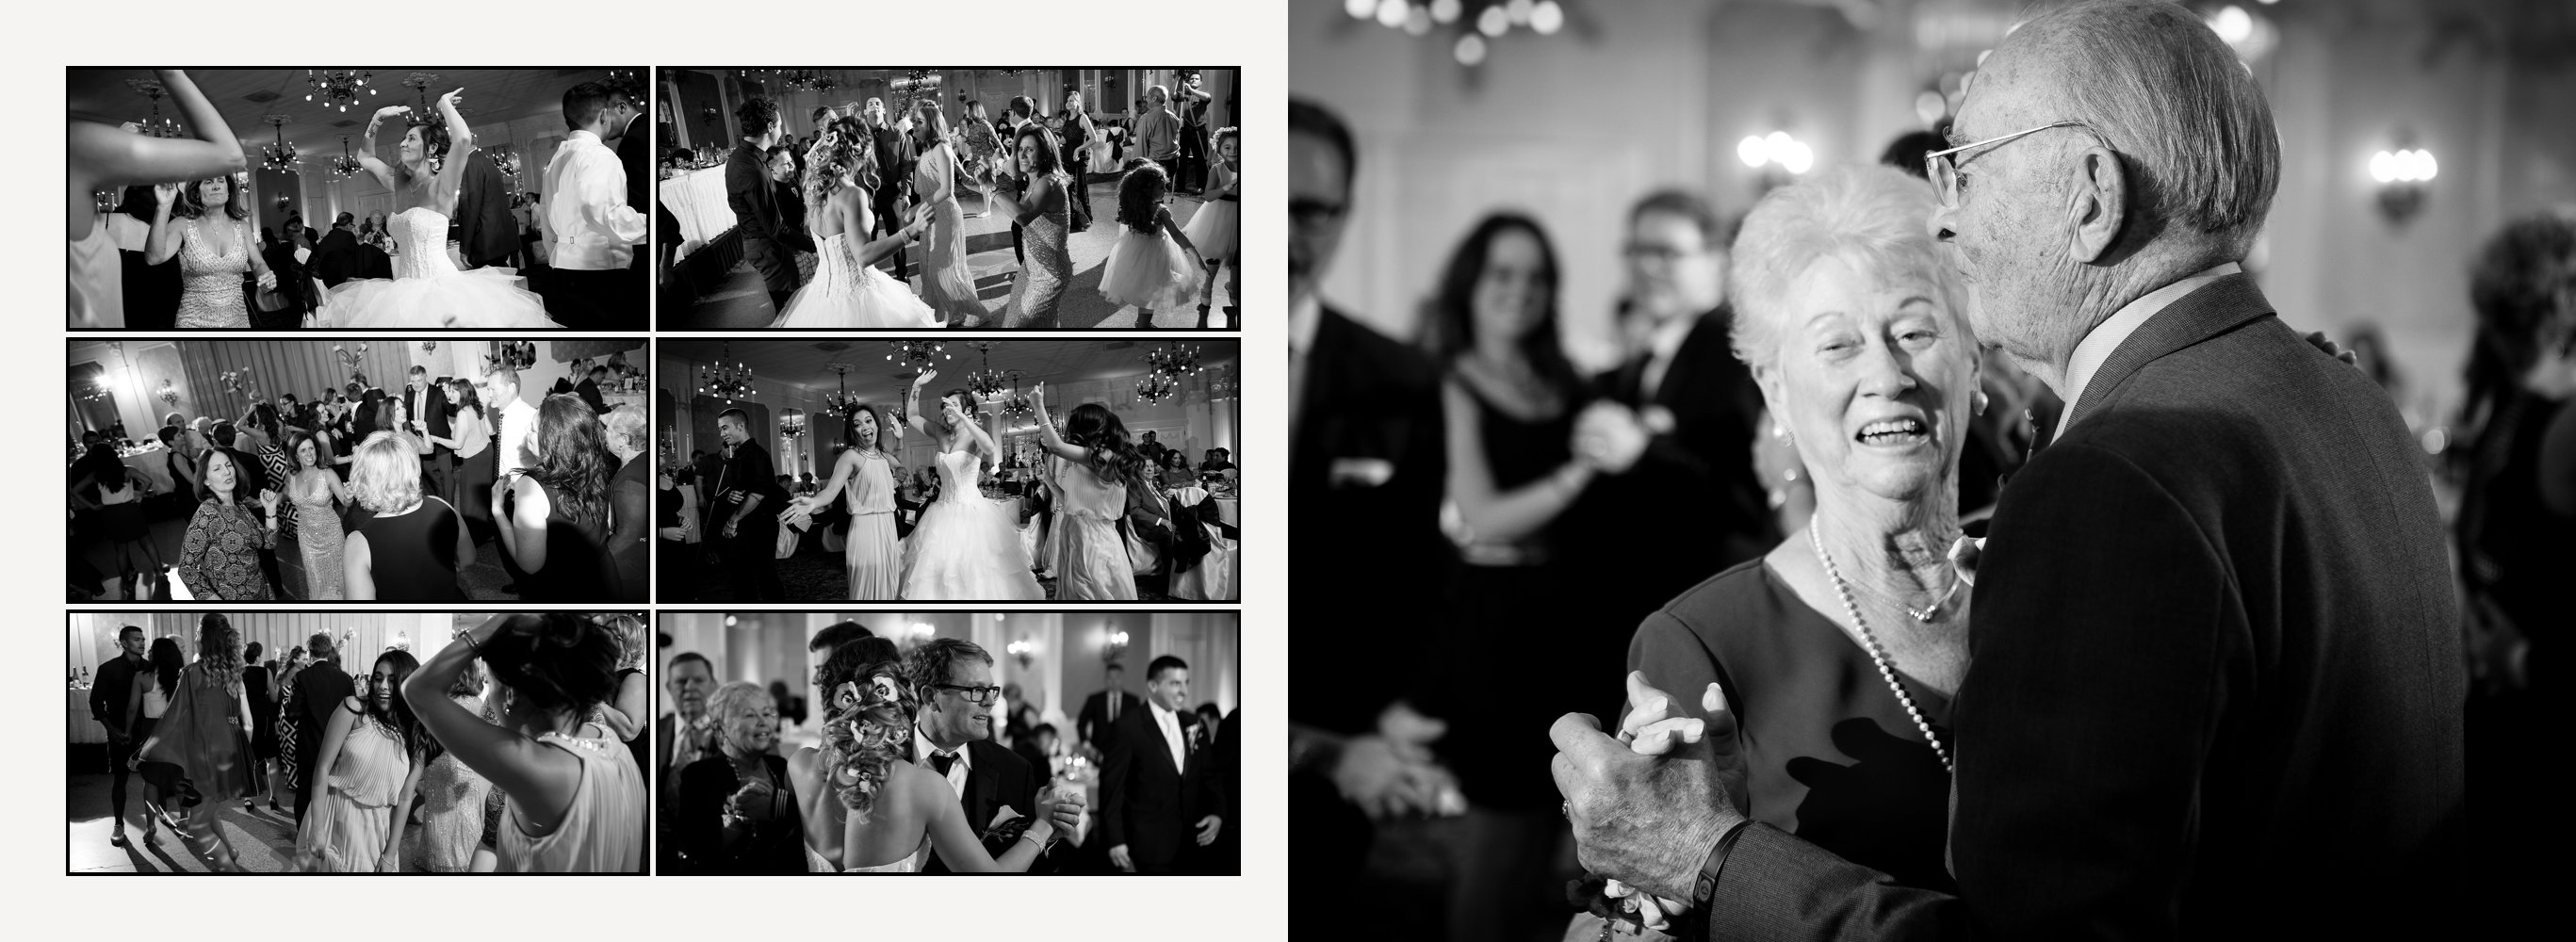 Custom designed wedding album spreads with all black and white photographs